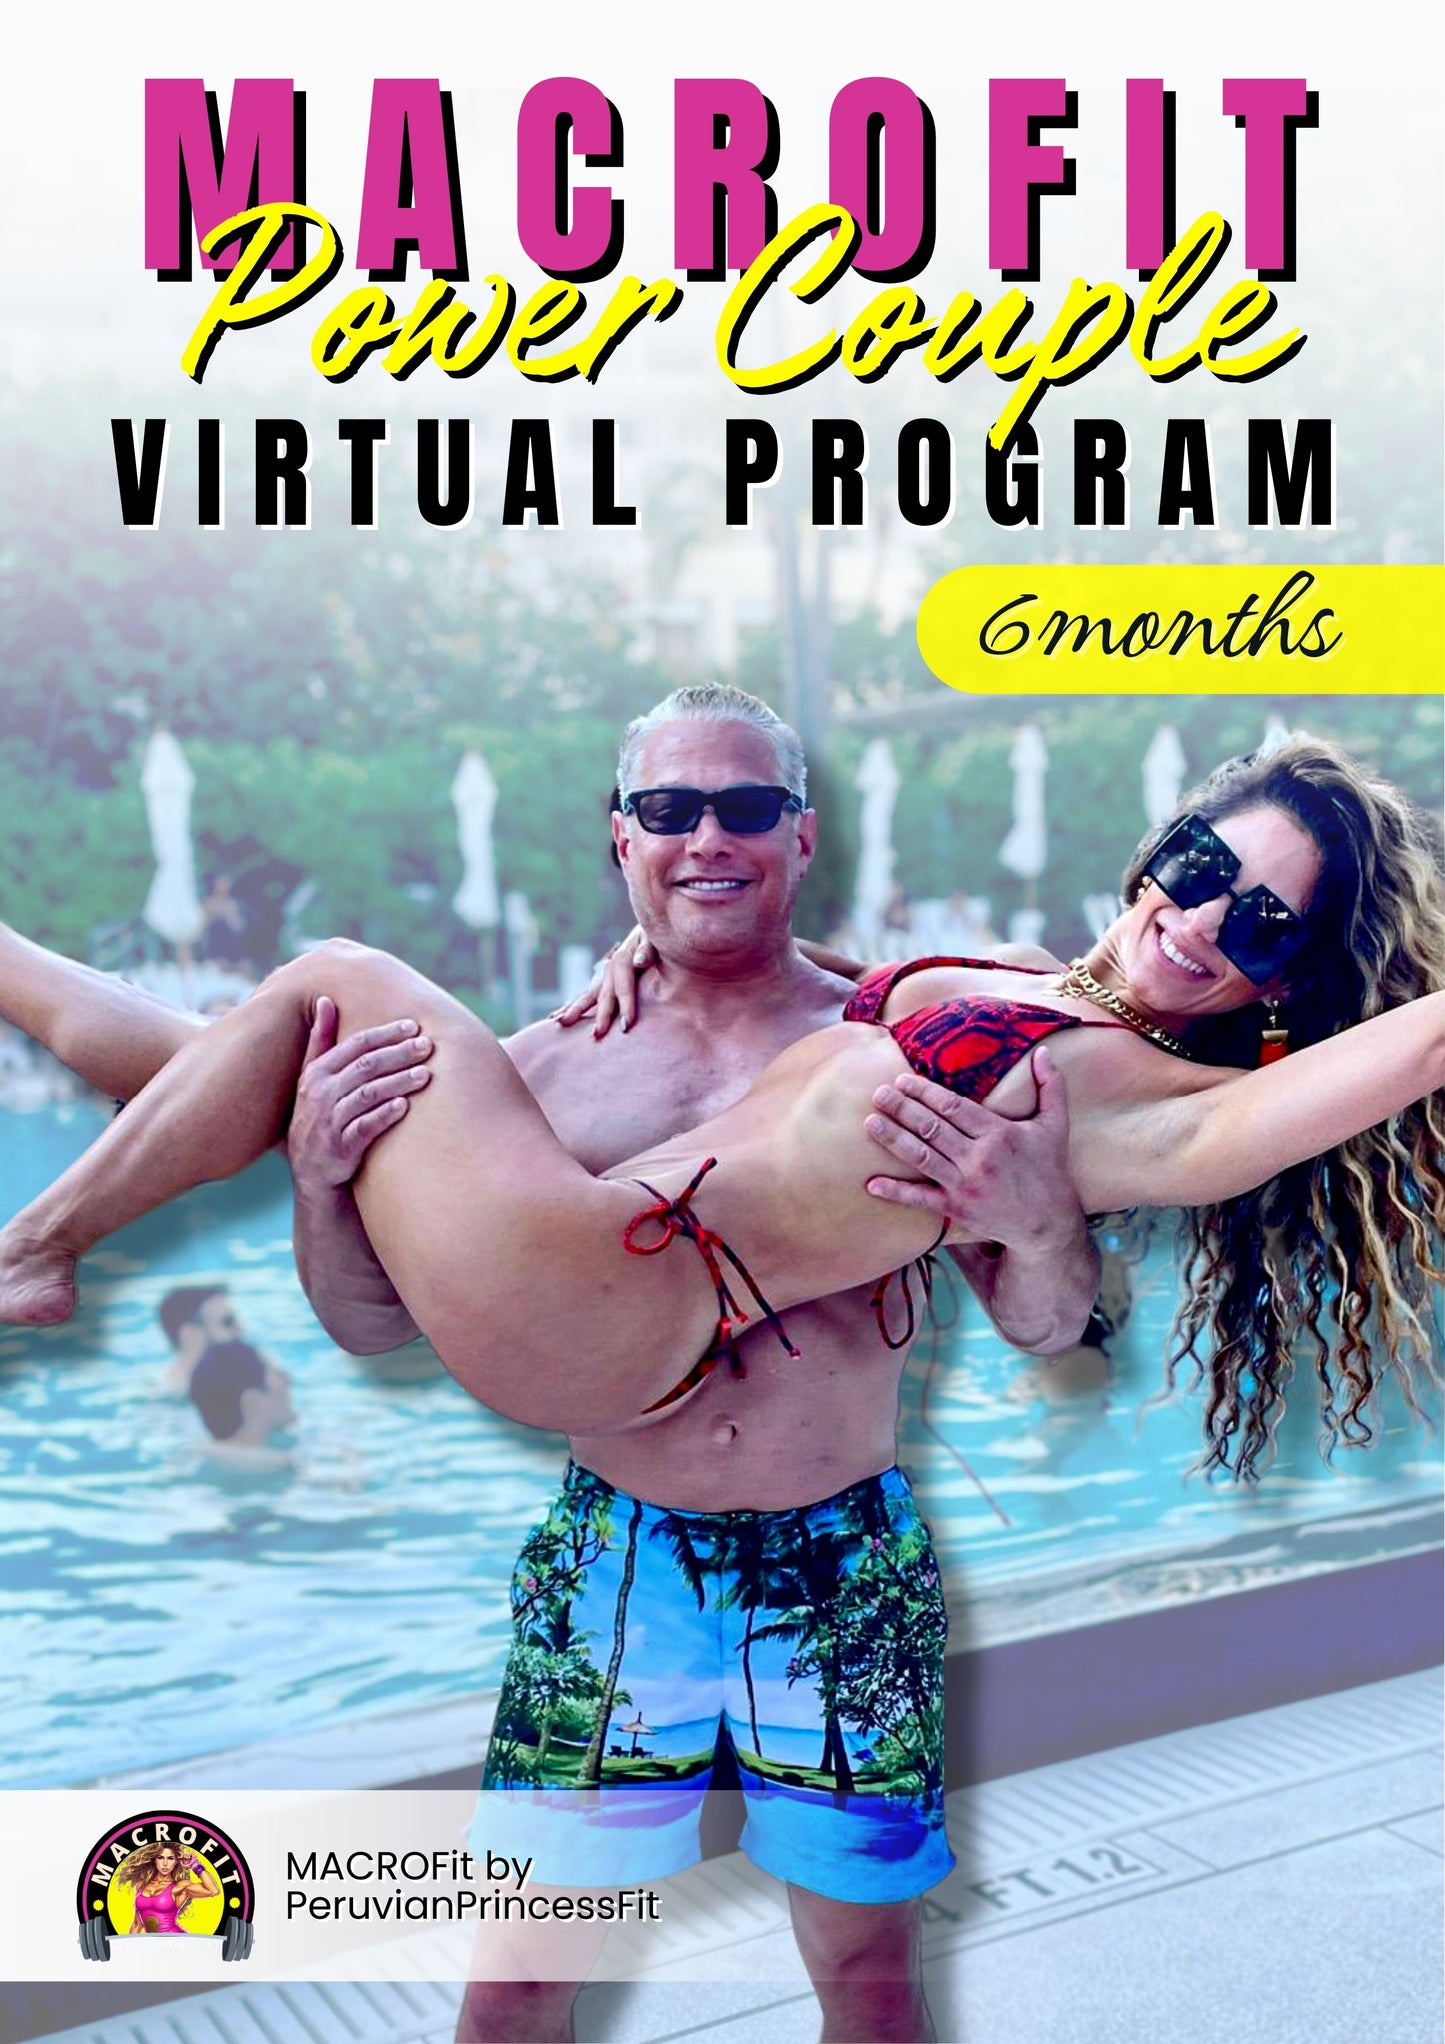 MACROFit Power Couple Virtual Program - 6 months